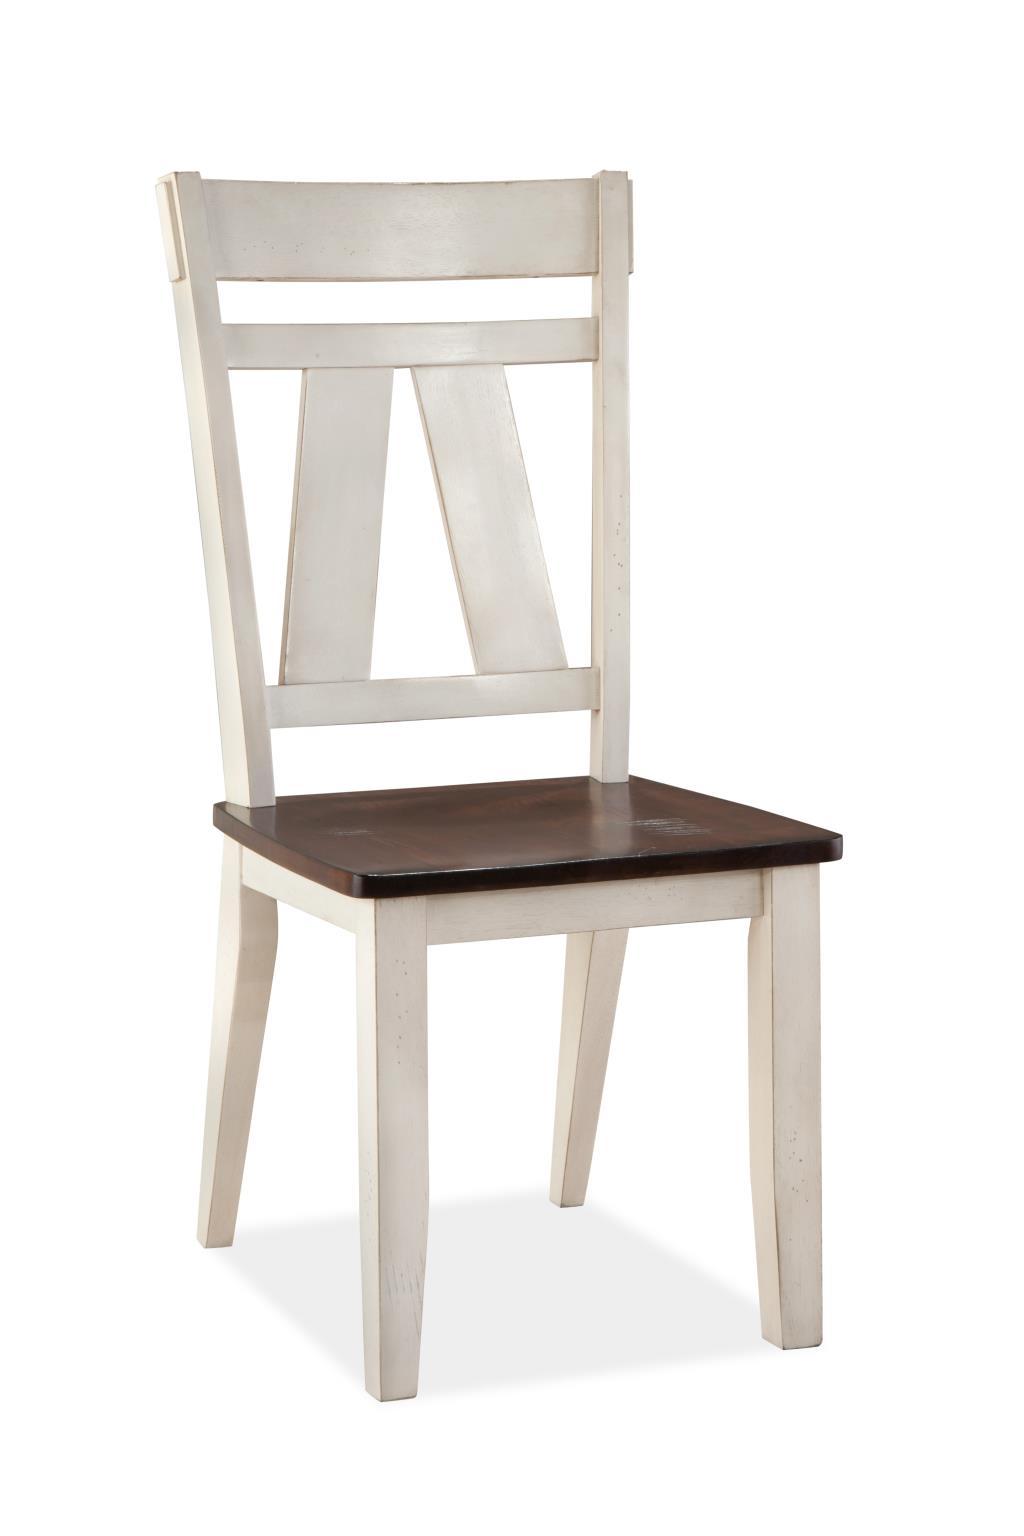 Bernards Furniture Winslow Dining Chair Set